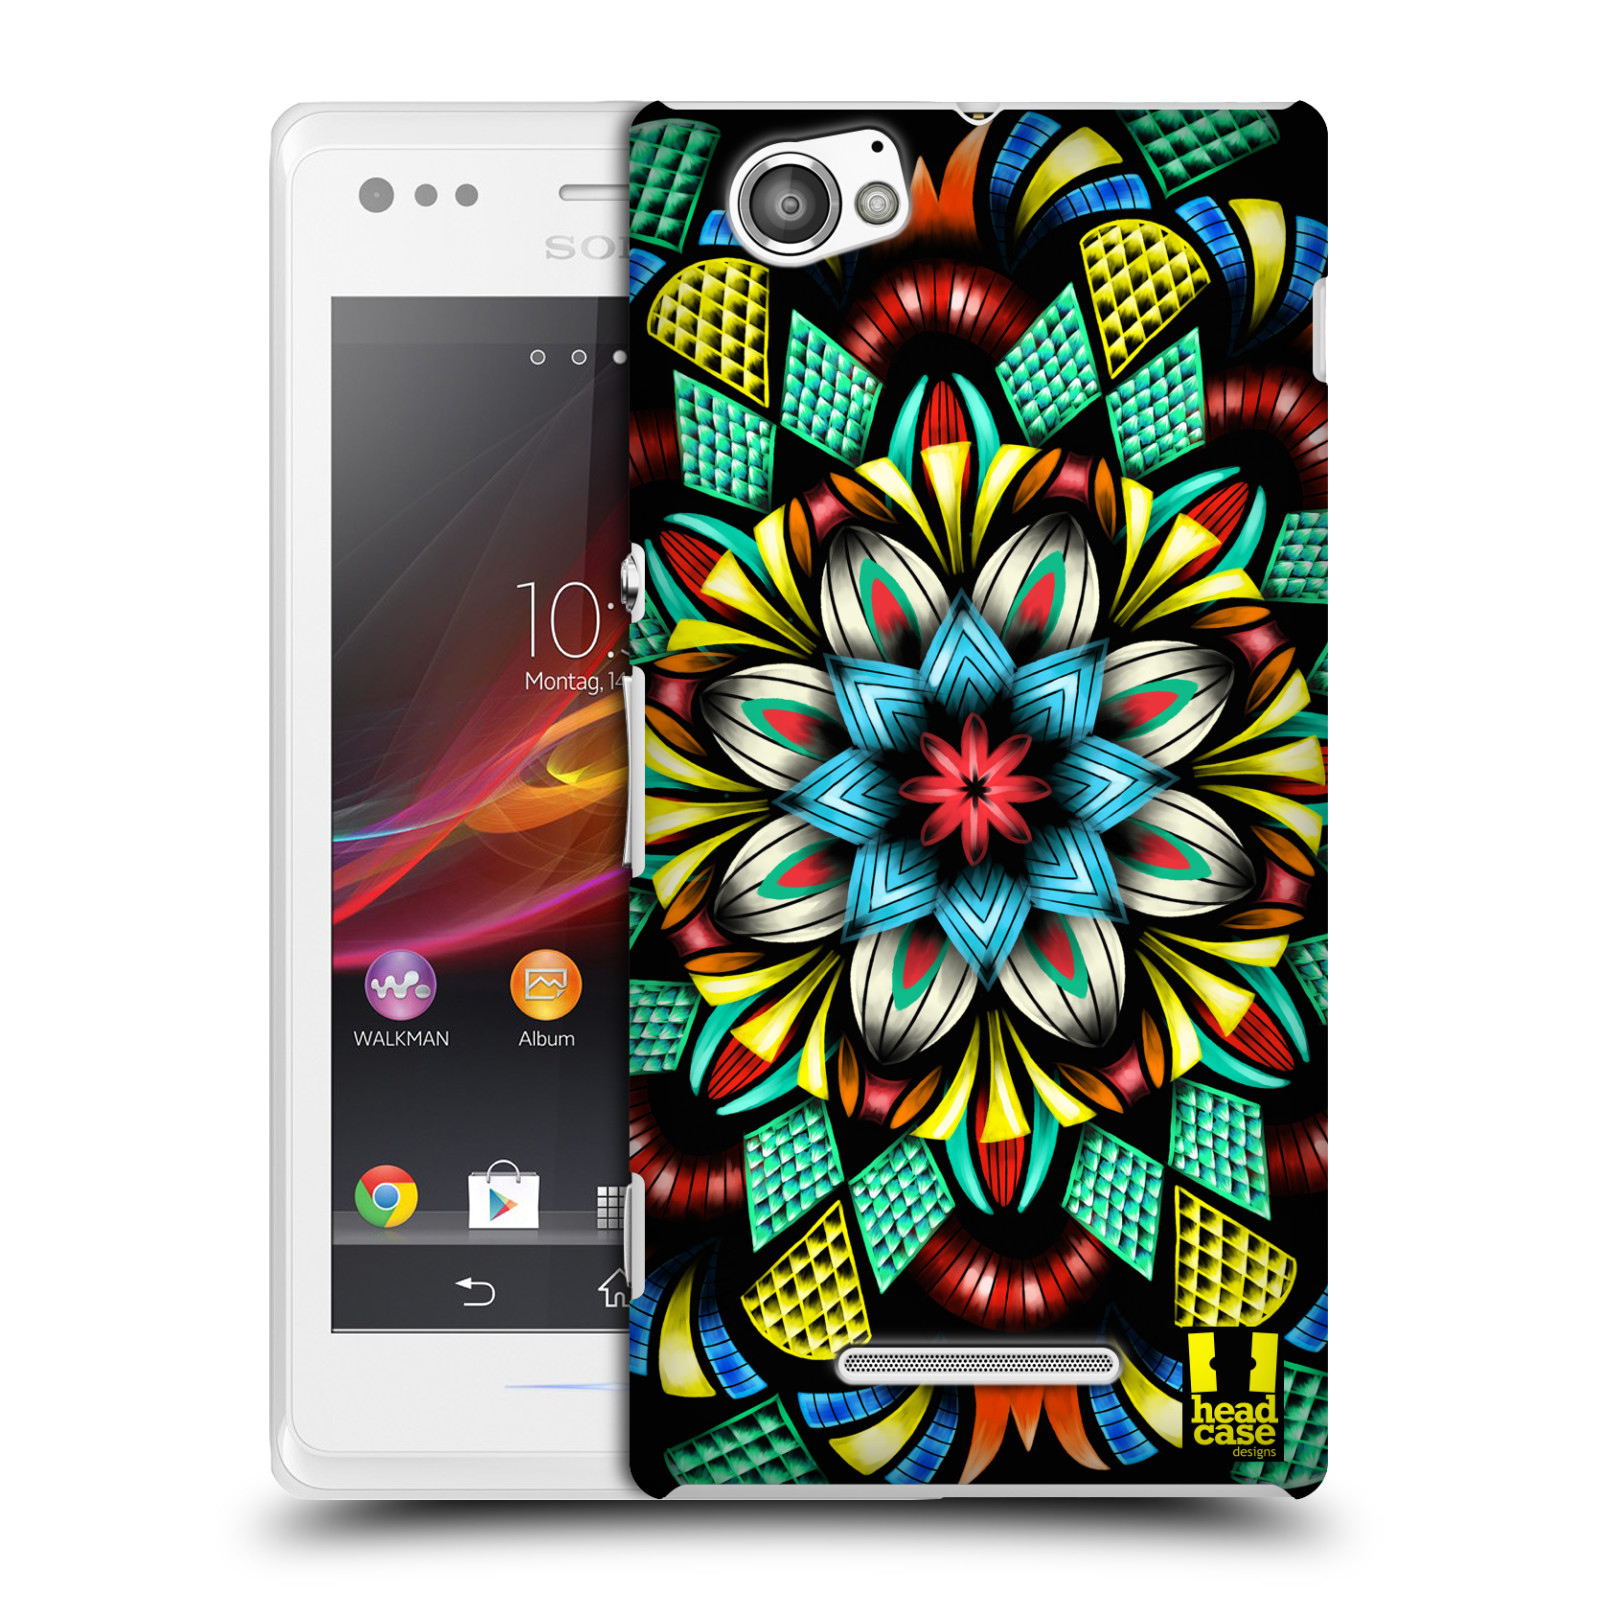 HEAD CASE plastový obal na mobil Sony Xperia M vzor Indie Mandala kaleidoskop barevný vzor TRADIČNÍ